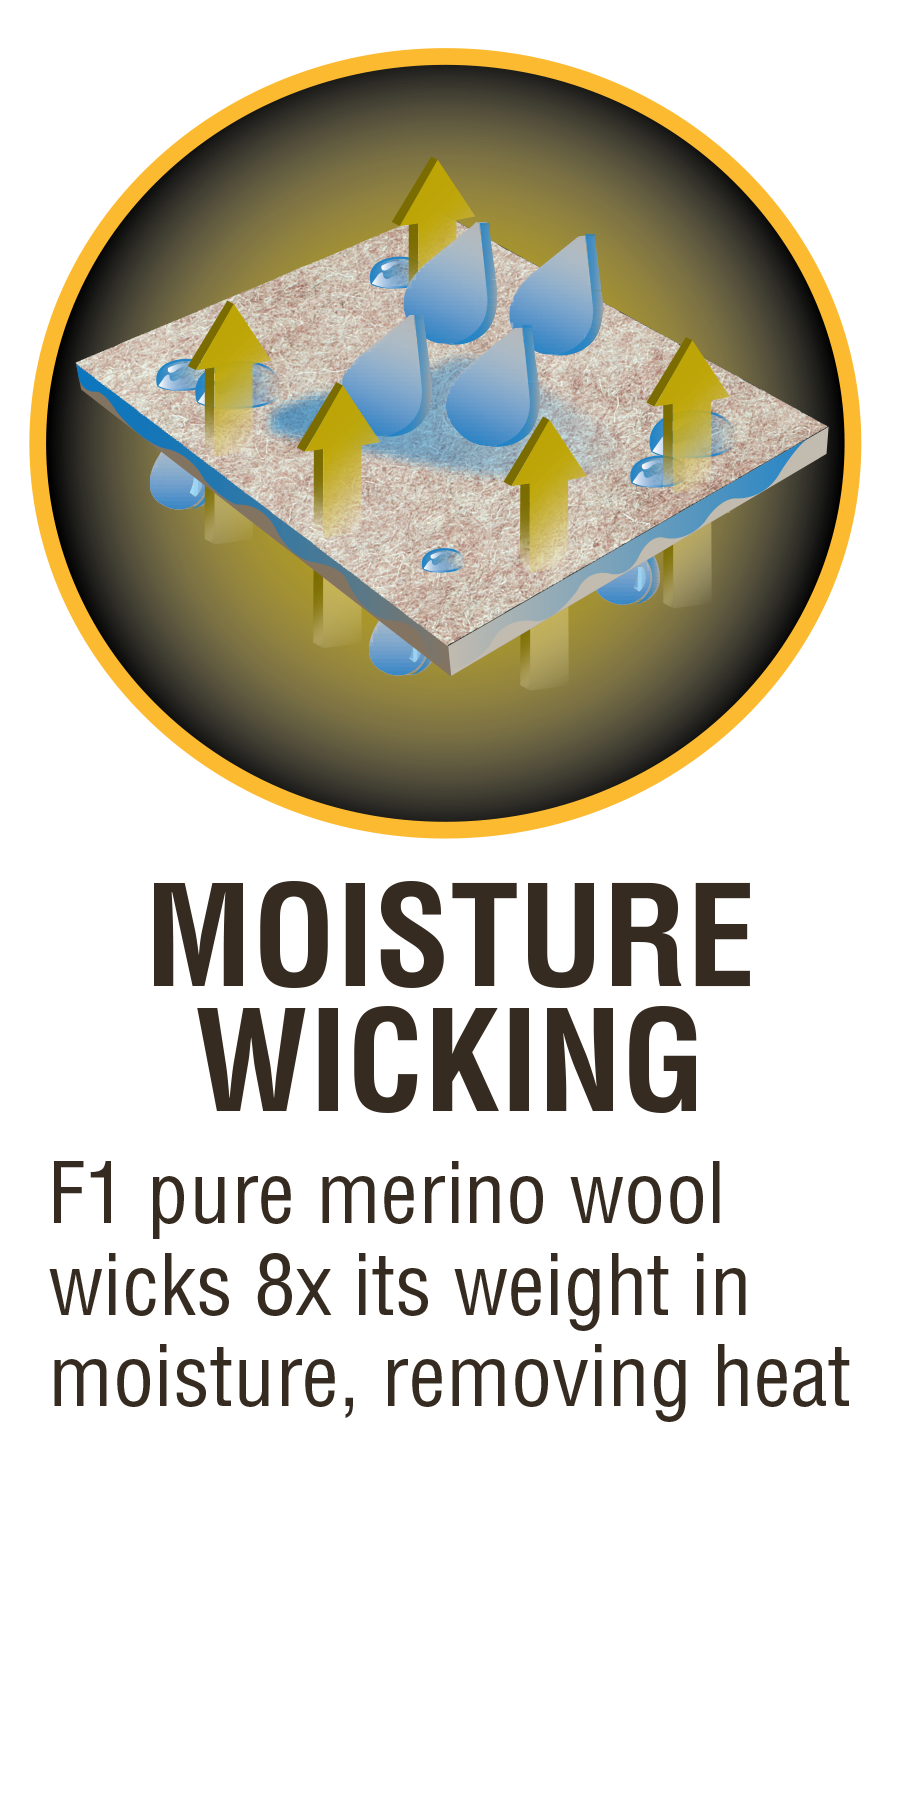 Moisture Wicking F1 pure merino wool wicks 8 times its weight in moisture, removing heat